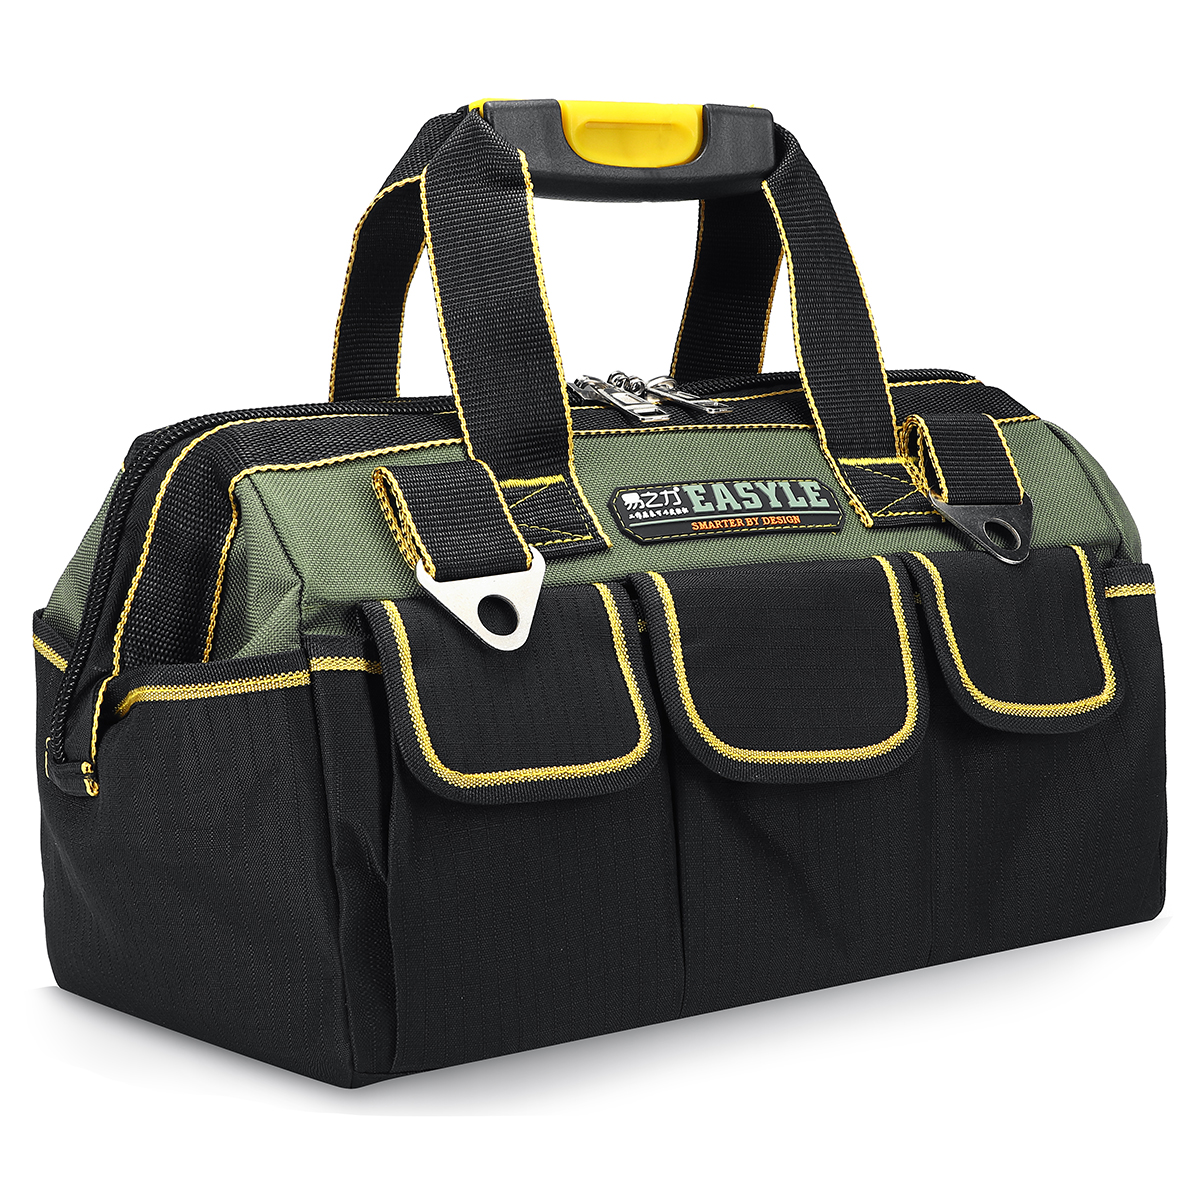 Portable-Oxford-Cloth-Hardware-Pouch-Heavy-Duty-Tool-Bag-Case-1316quot18quot20quot-1395294-7